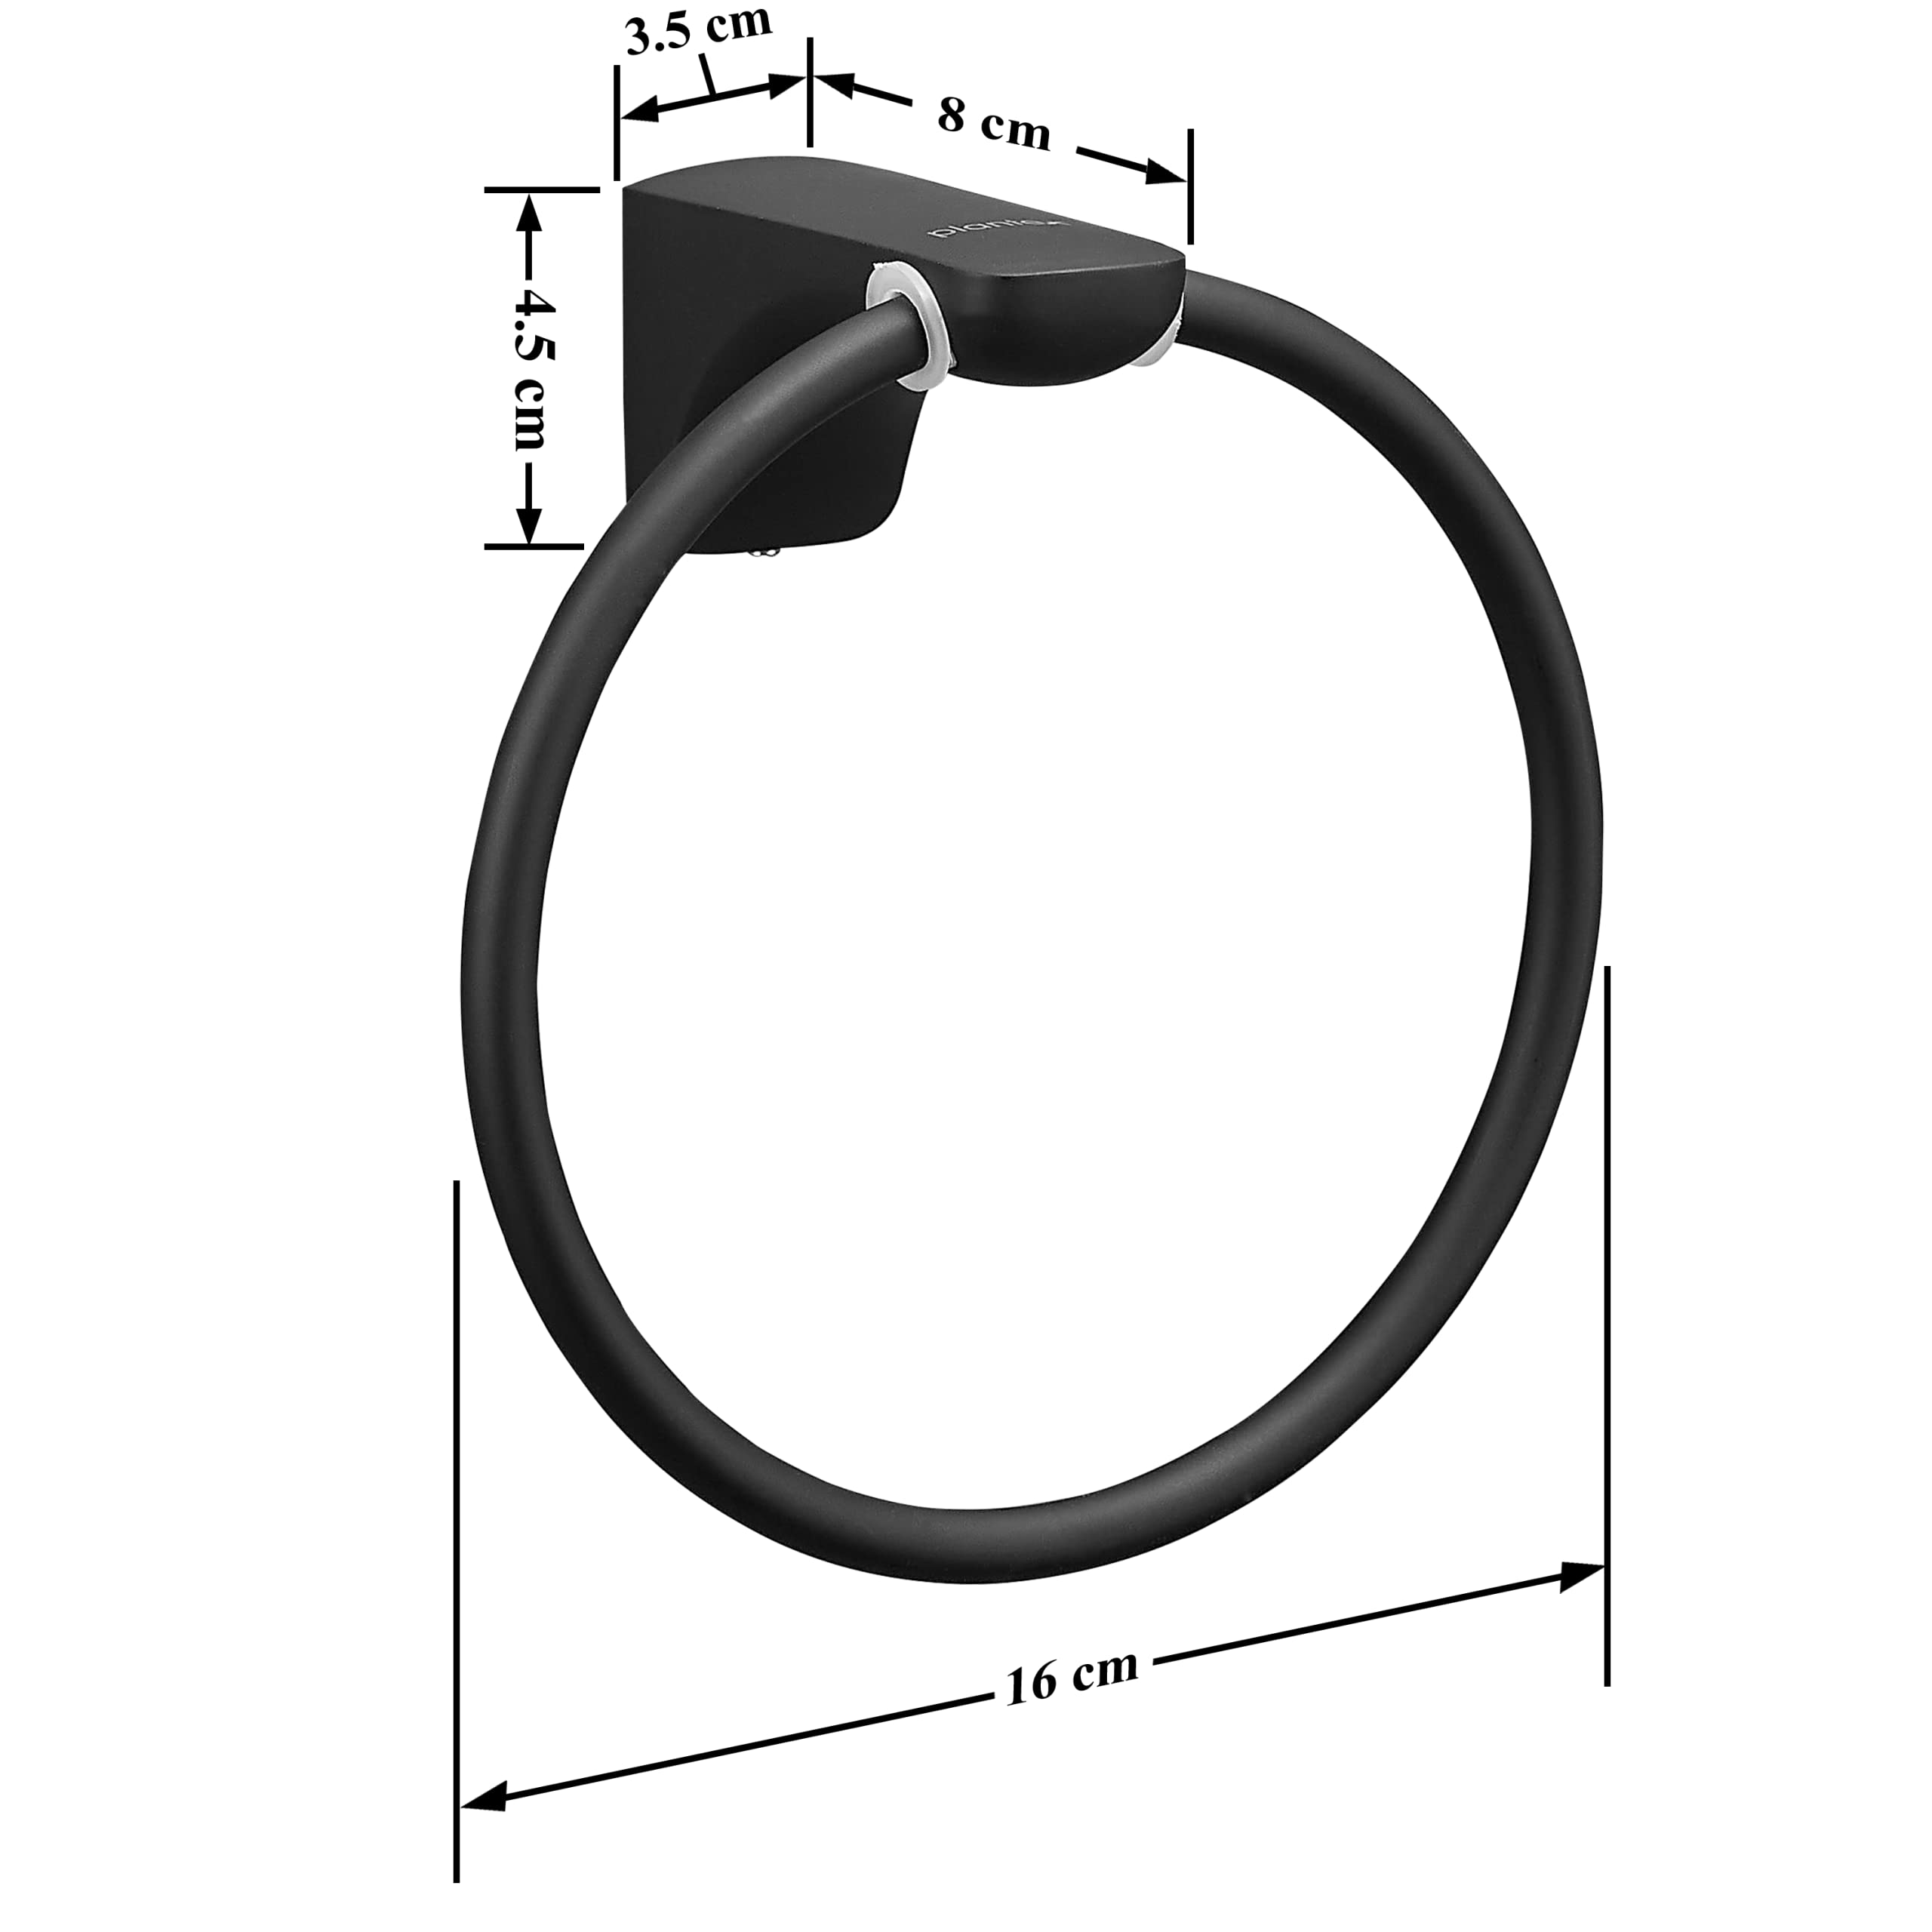 Plantex Space Aluminium Napkin Ring/Towel Ring/Napkin Holder/Towel Hanger/Bathroom Accessories (972, Black)